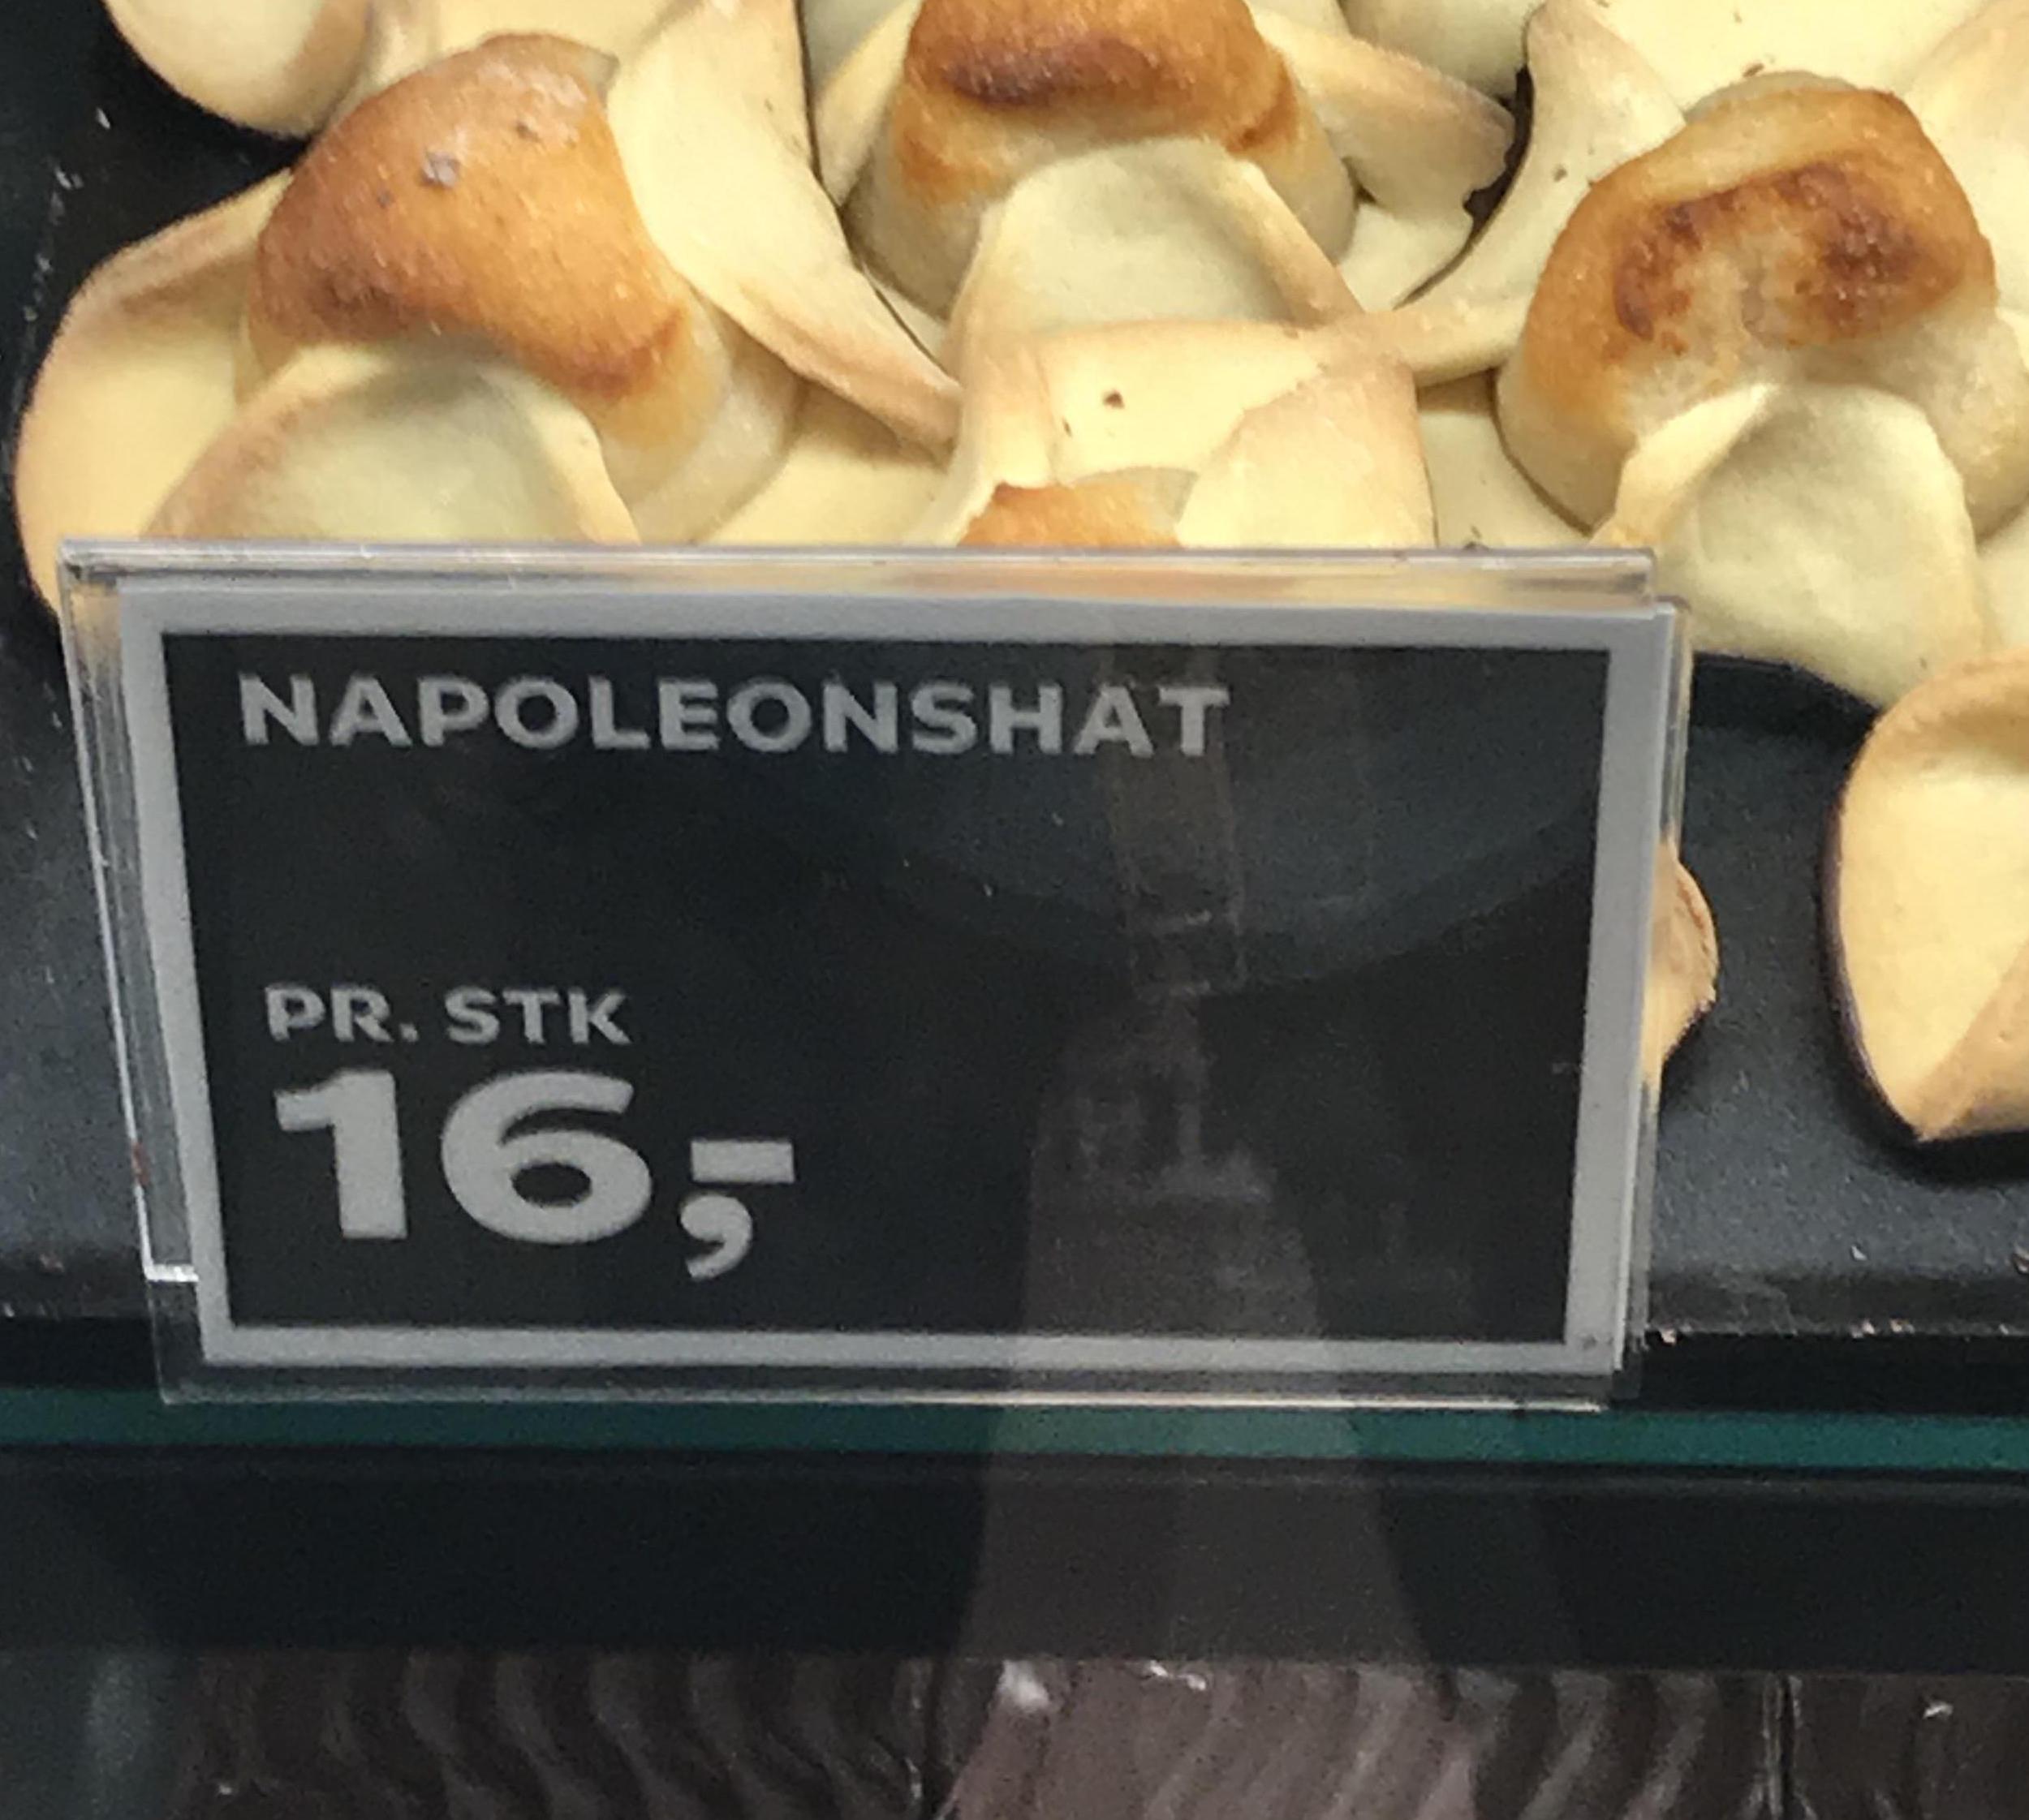 A display of Napoleon's Hat pastries reads 'Napoleonshat'